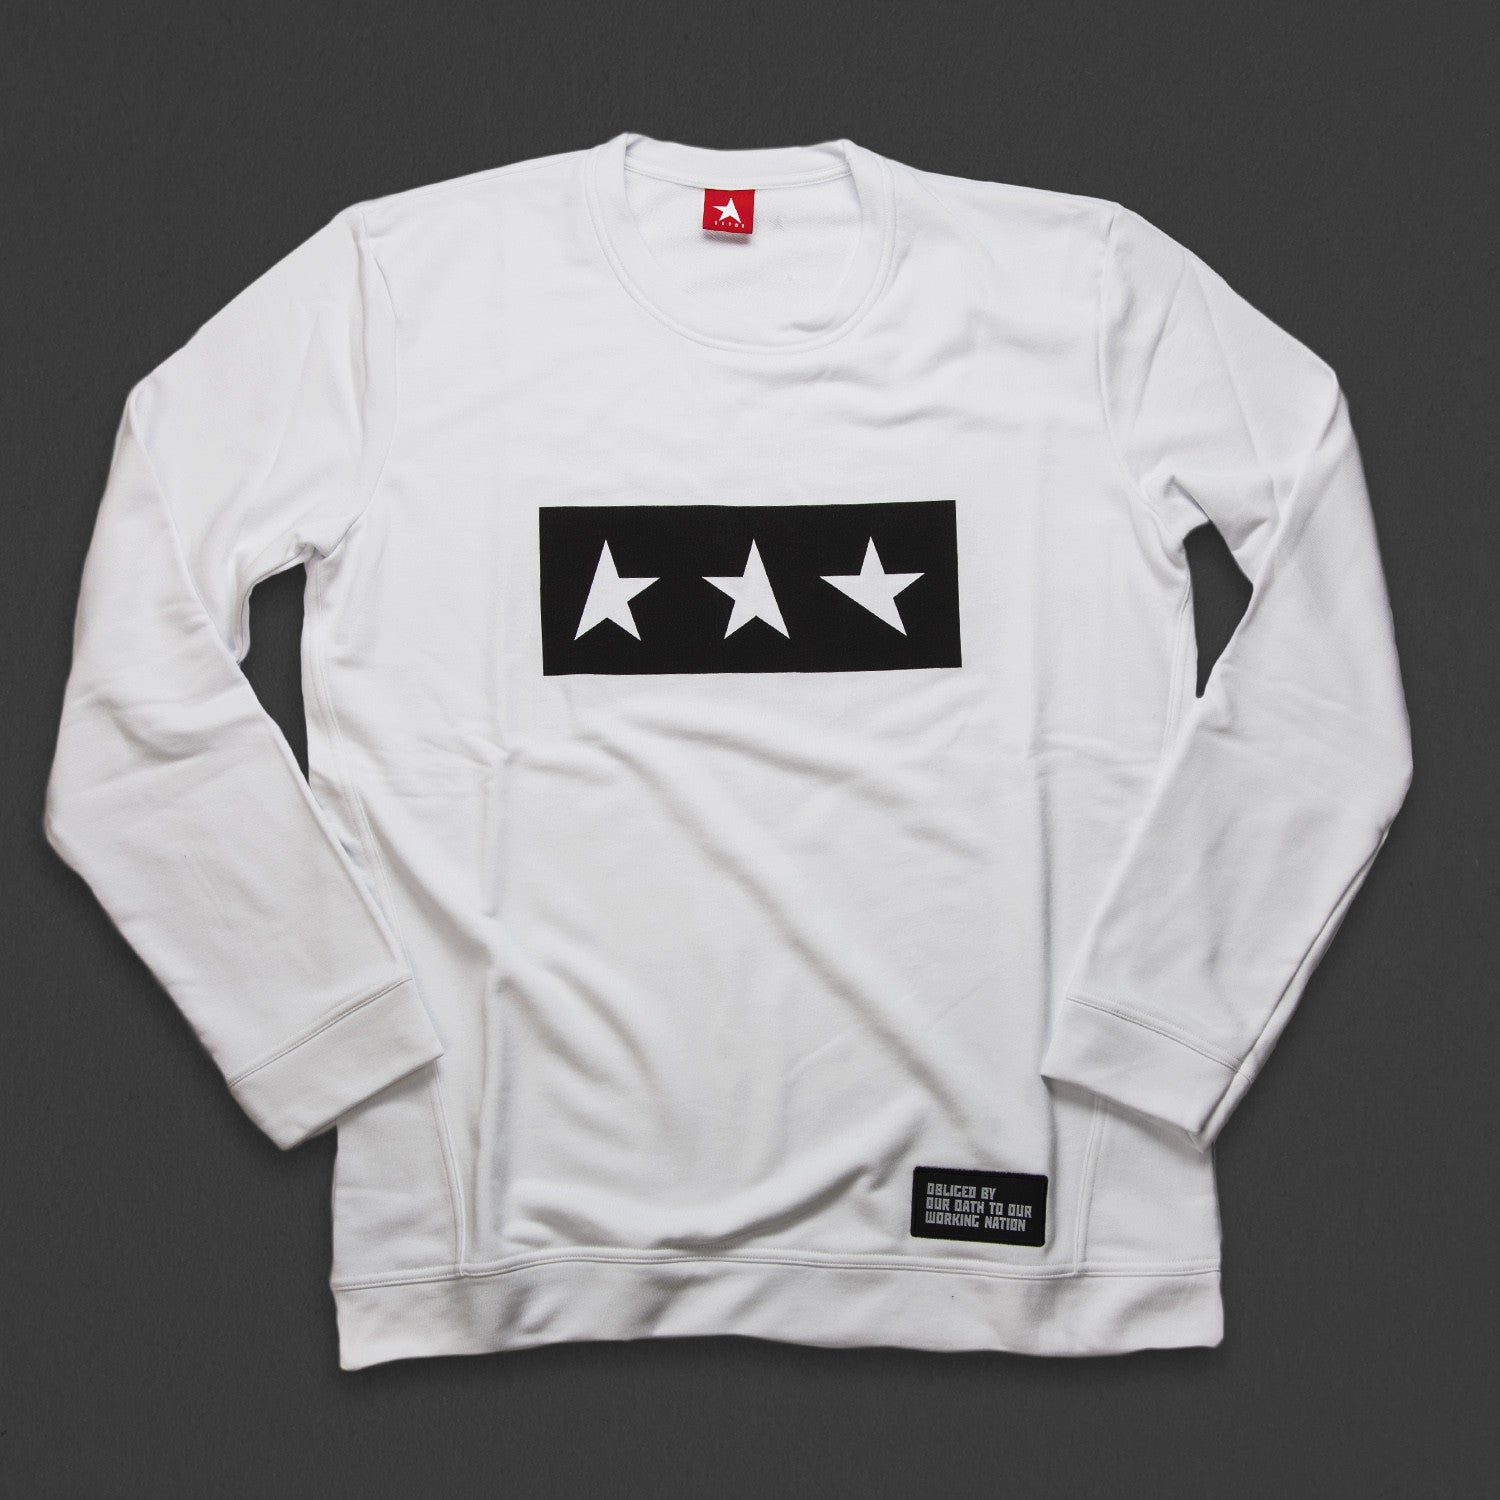 13th long sleeve TITOS T-shirt white/black 3 star logo